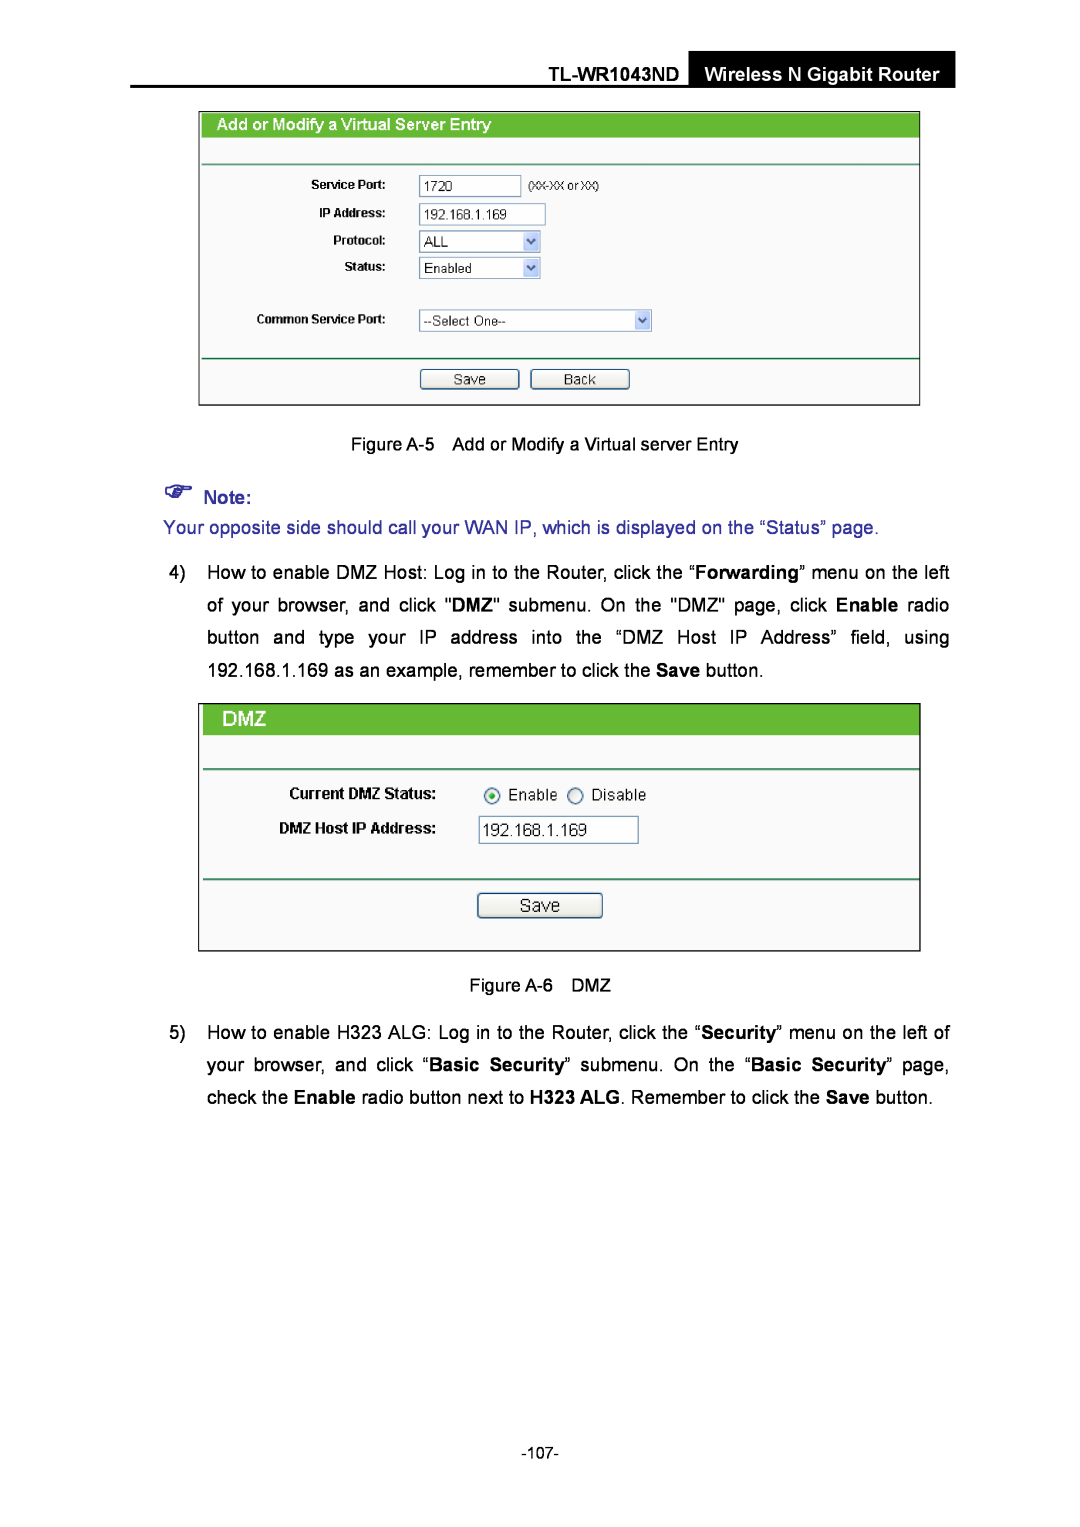 TP-Link manual TL-WR1043ND Wireless N Gigabit Router, Figure A-5 Add or Modify a Virtual server Entry, Figure A-6 DMZ 